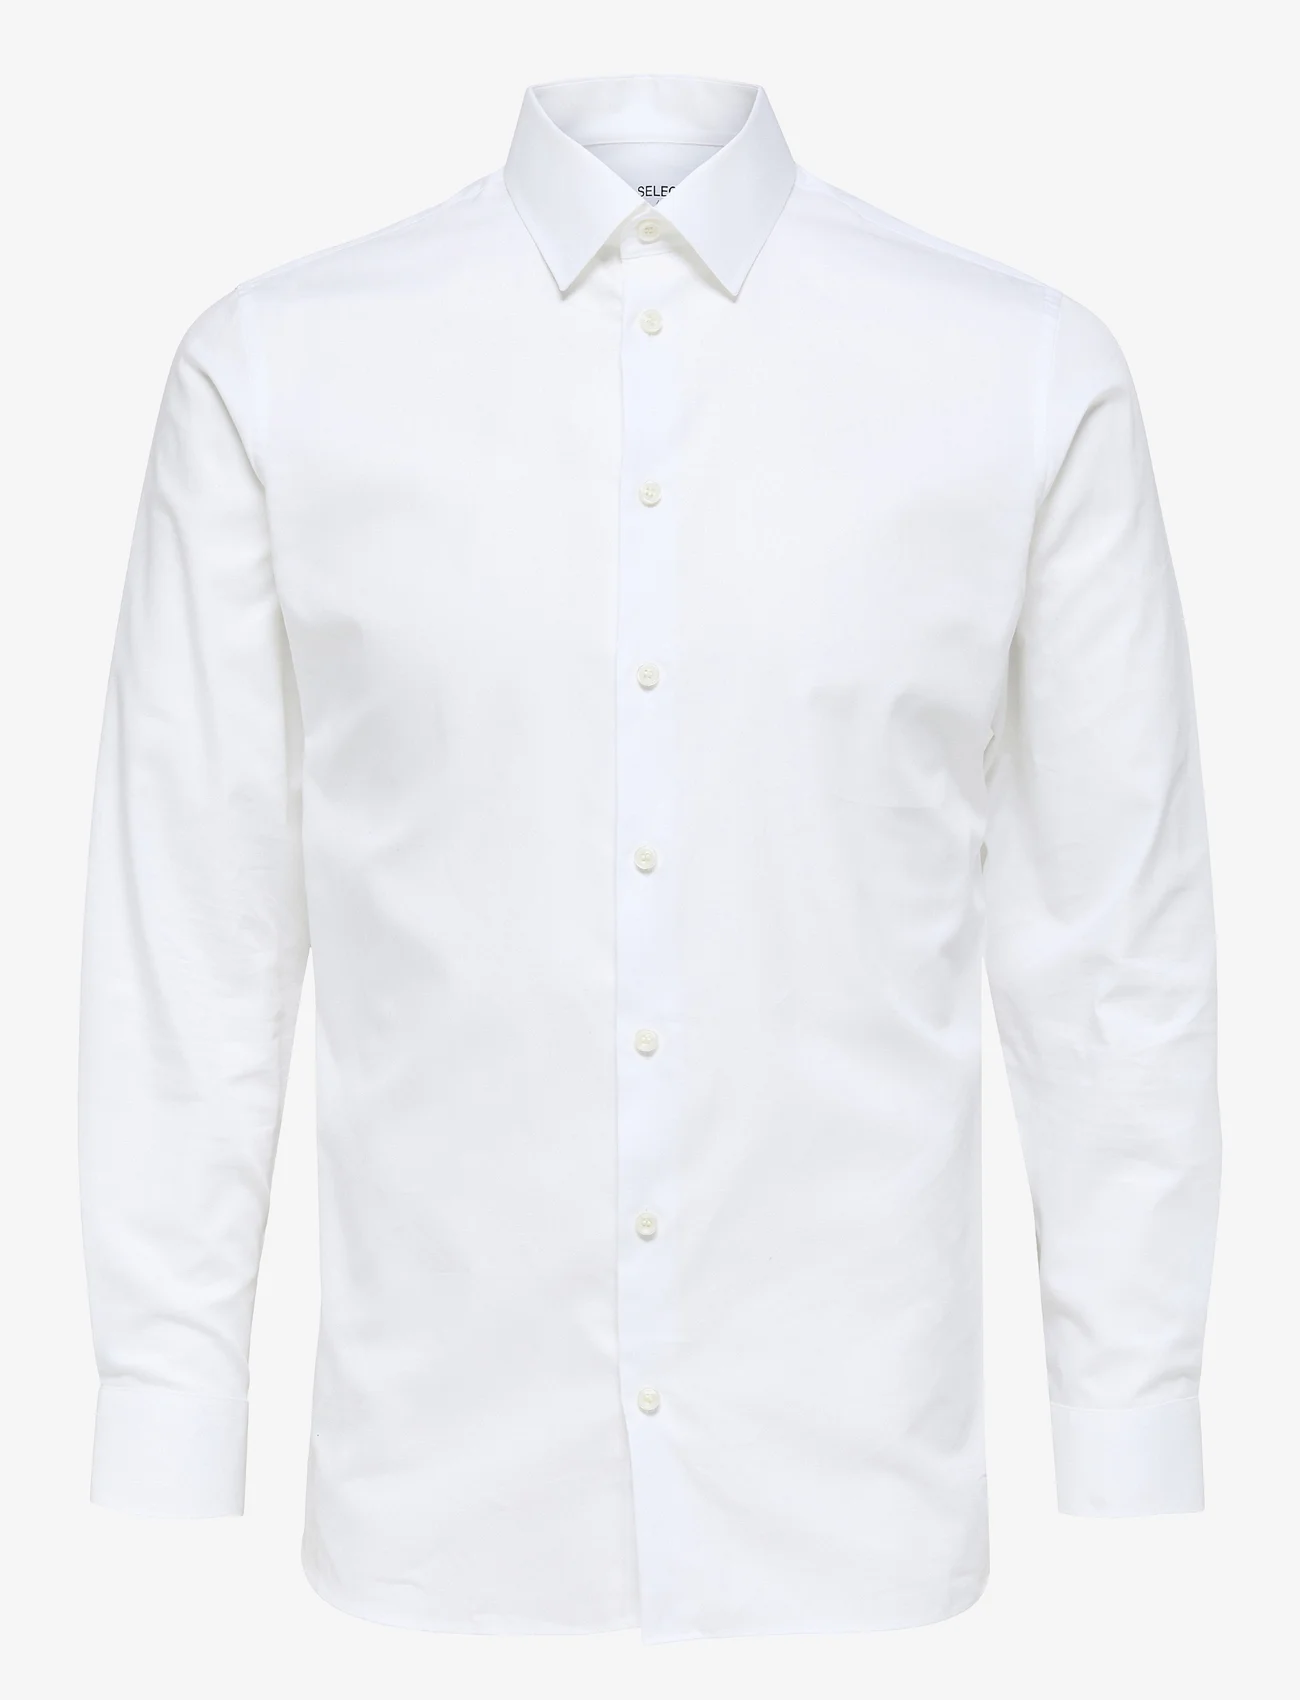 Selected Homme - SLHSLIMETHAN SHIRT LS CLASSIC NOOS - laisvalaikio marškiniai - bright white - 0